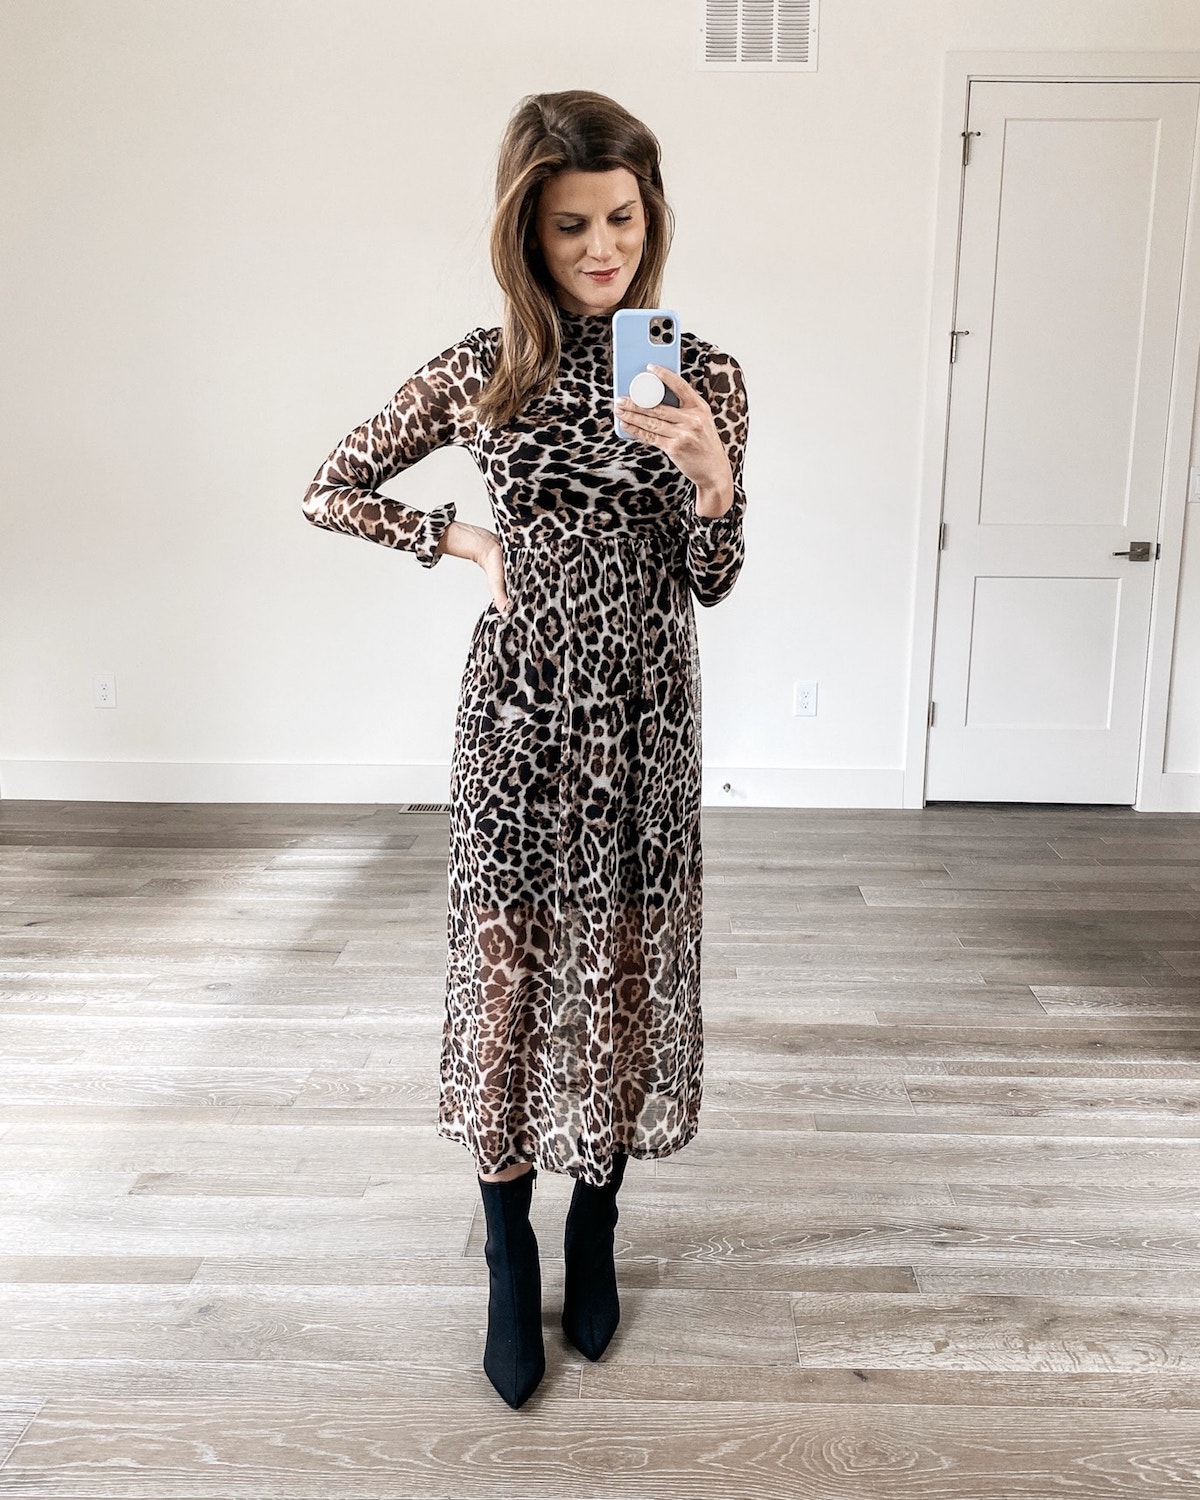 Brighton Keller wearing leopard dress and sock booties